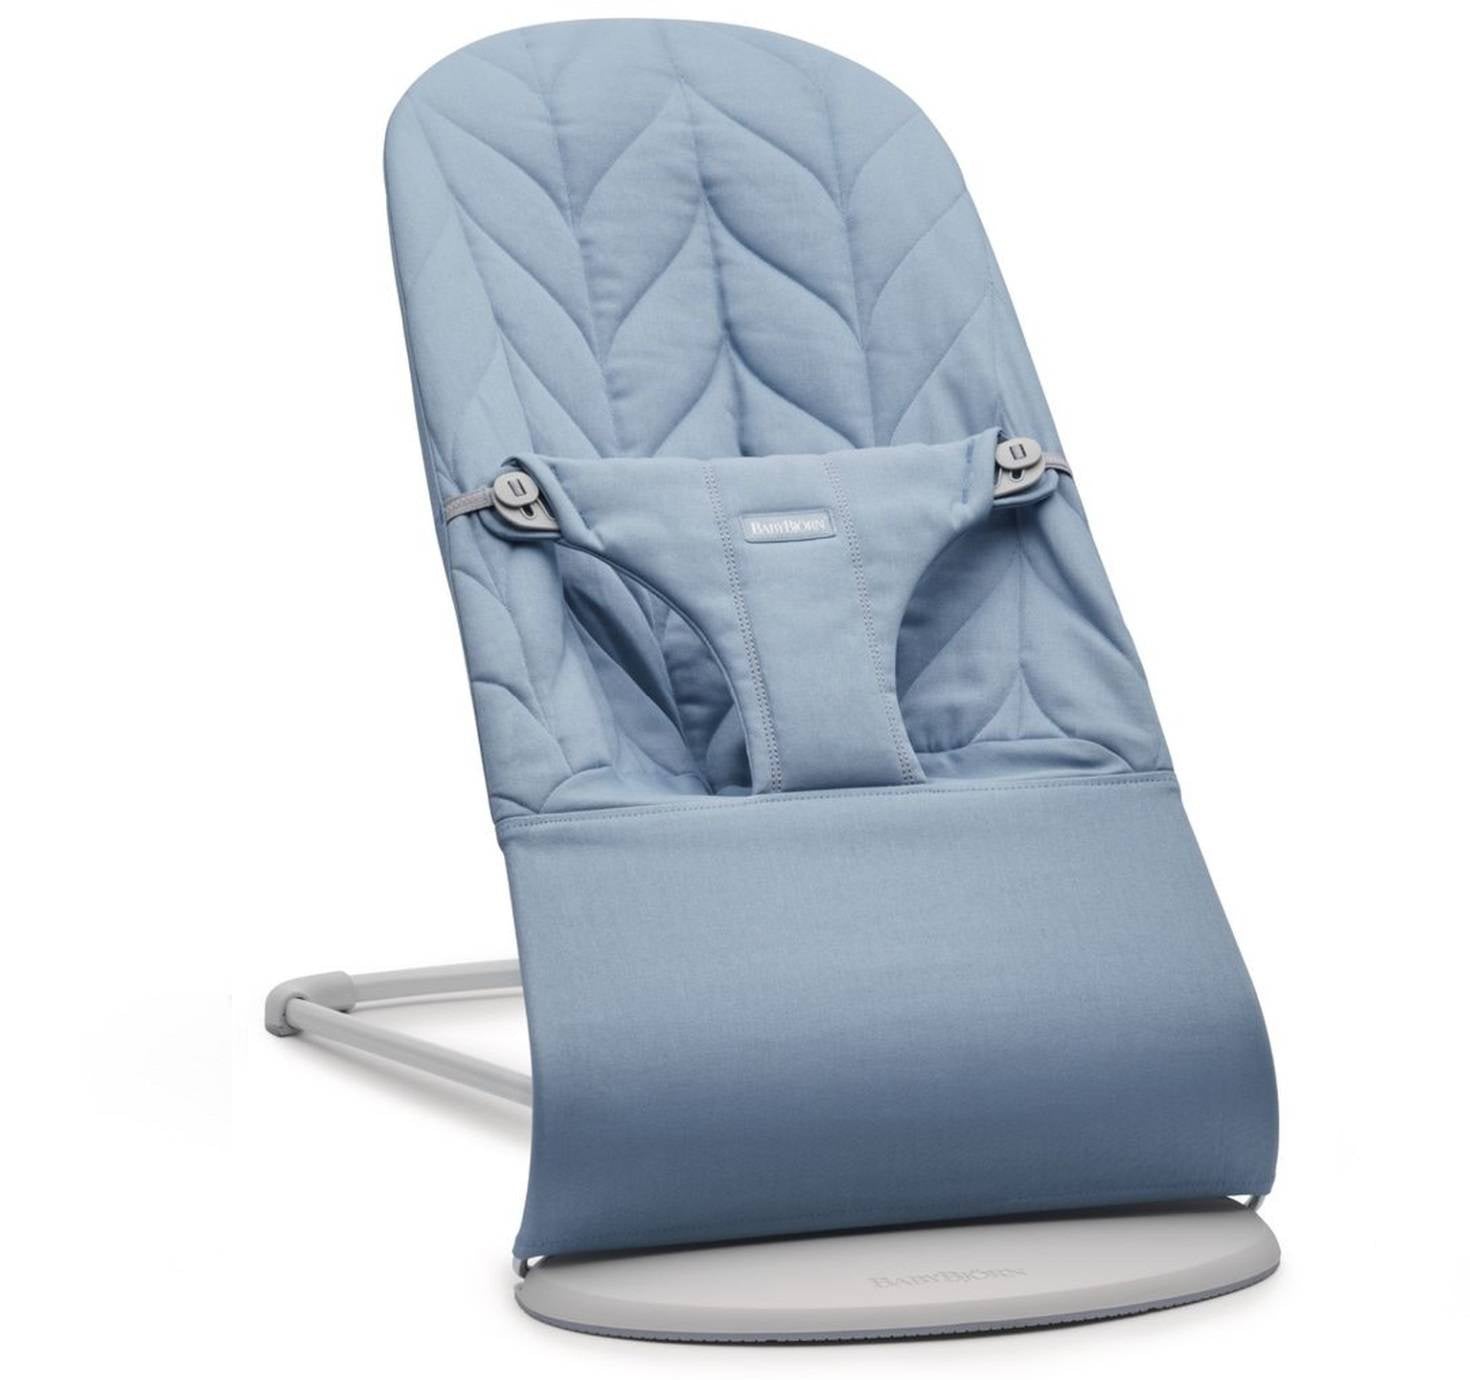 Babybjorn - Bliss gewebtes Deckchair, Blütenblatt, blau